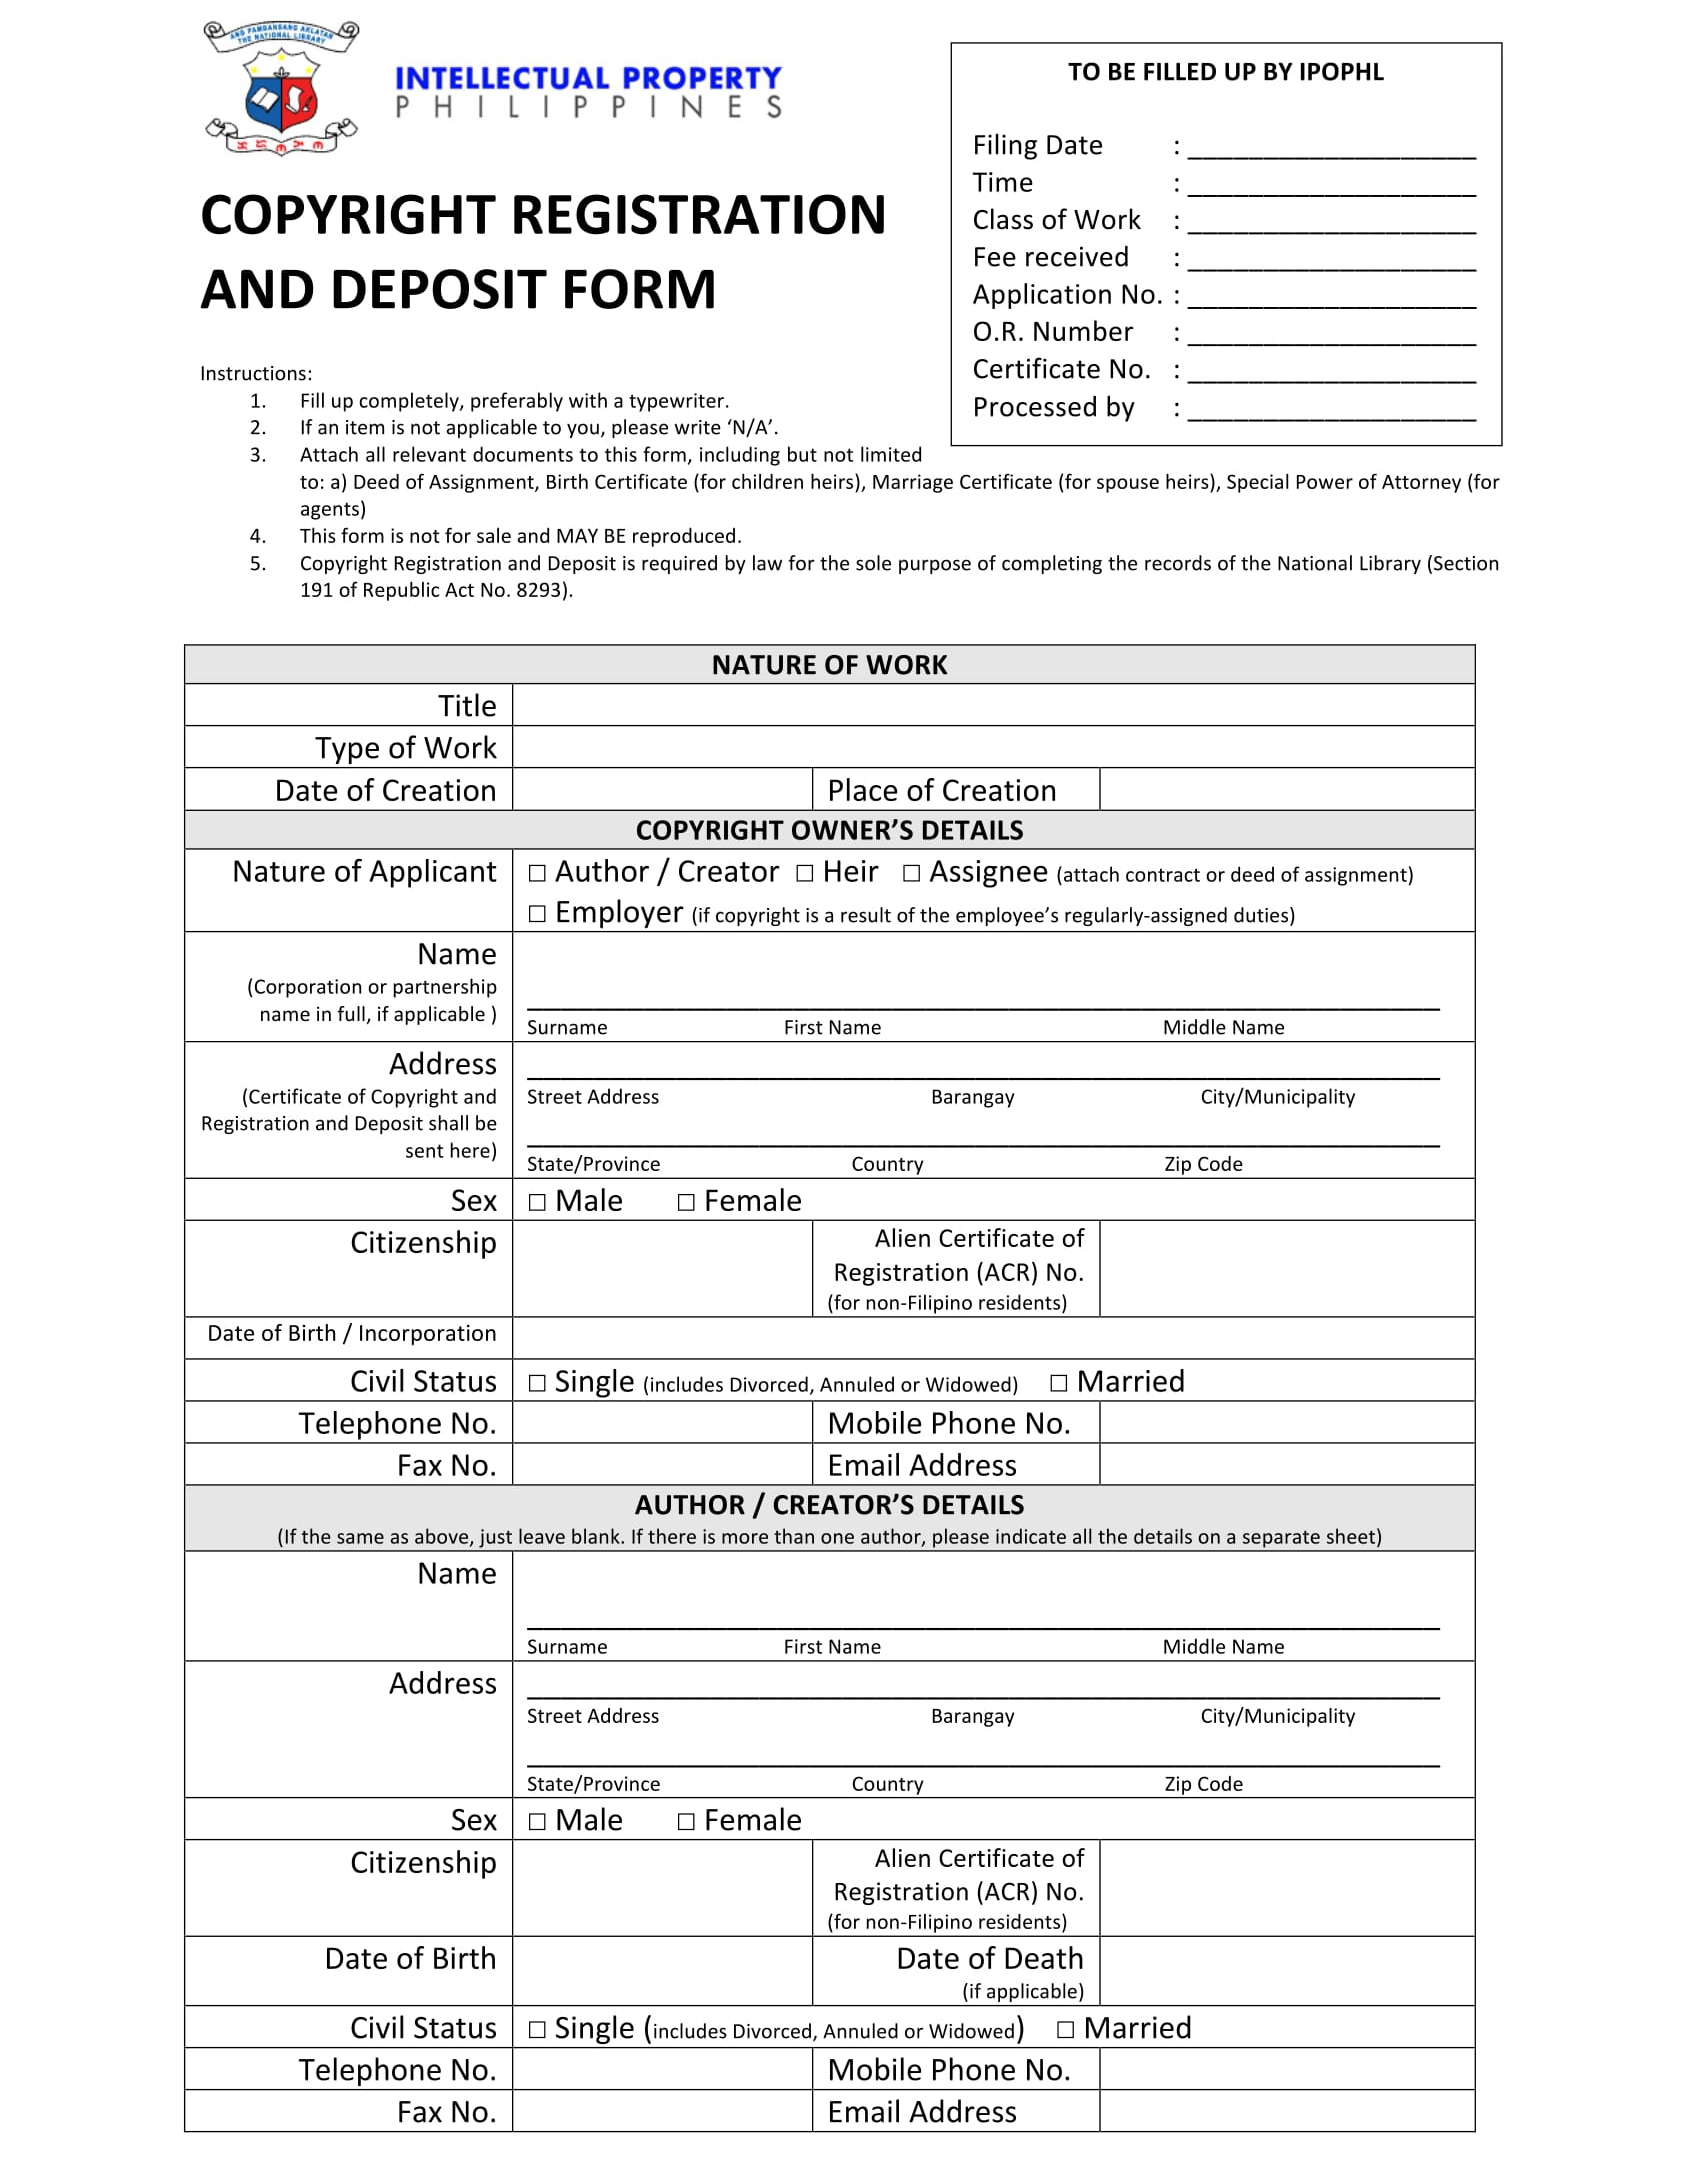 copyright registration and deposit form 1